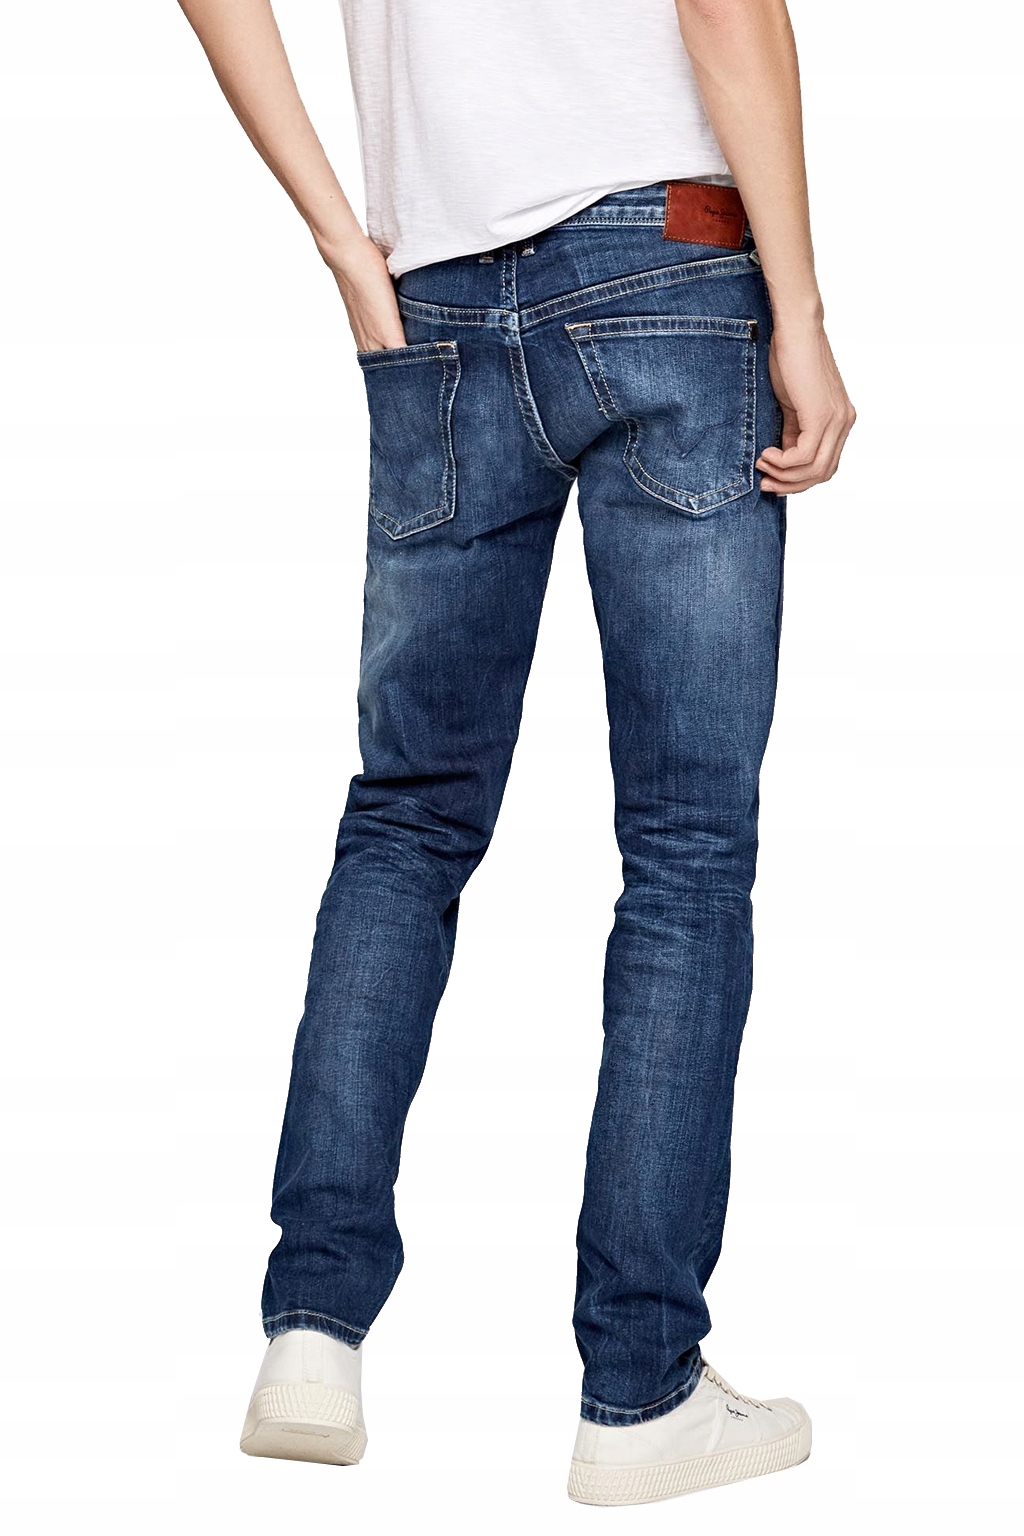 macacão jeans curto preto